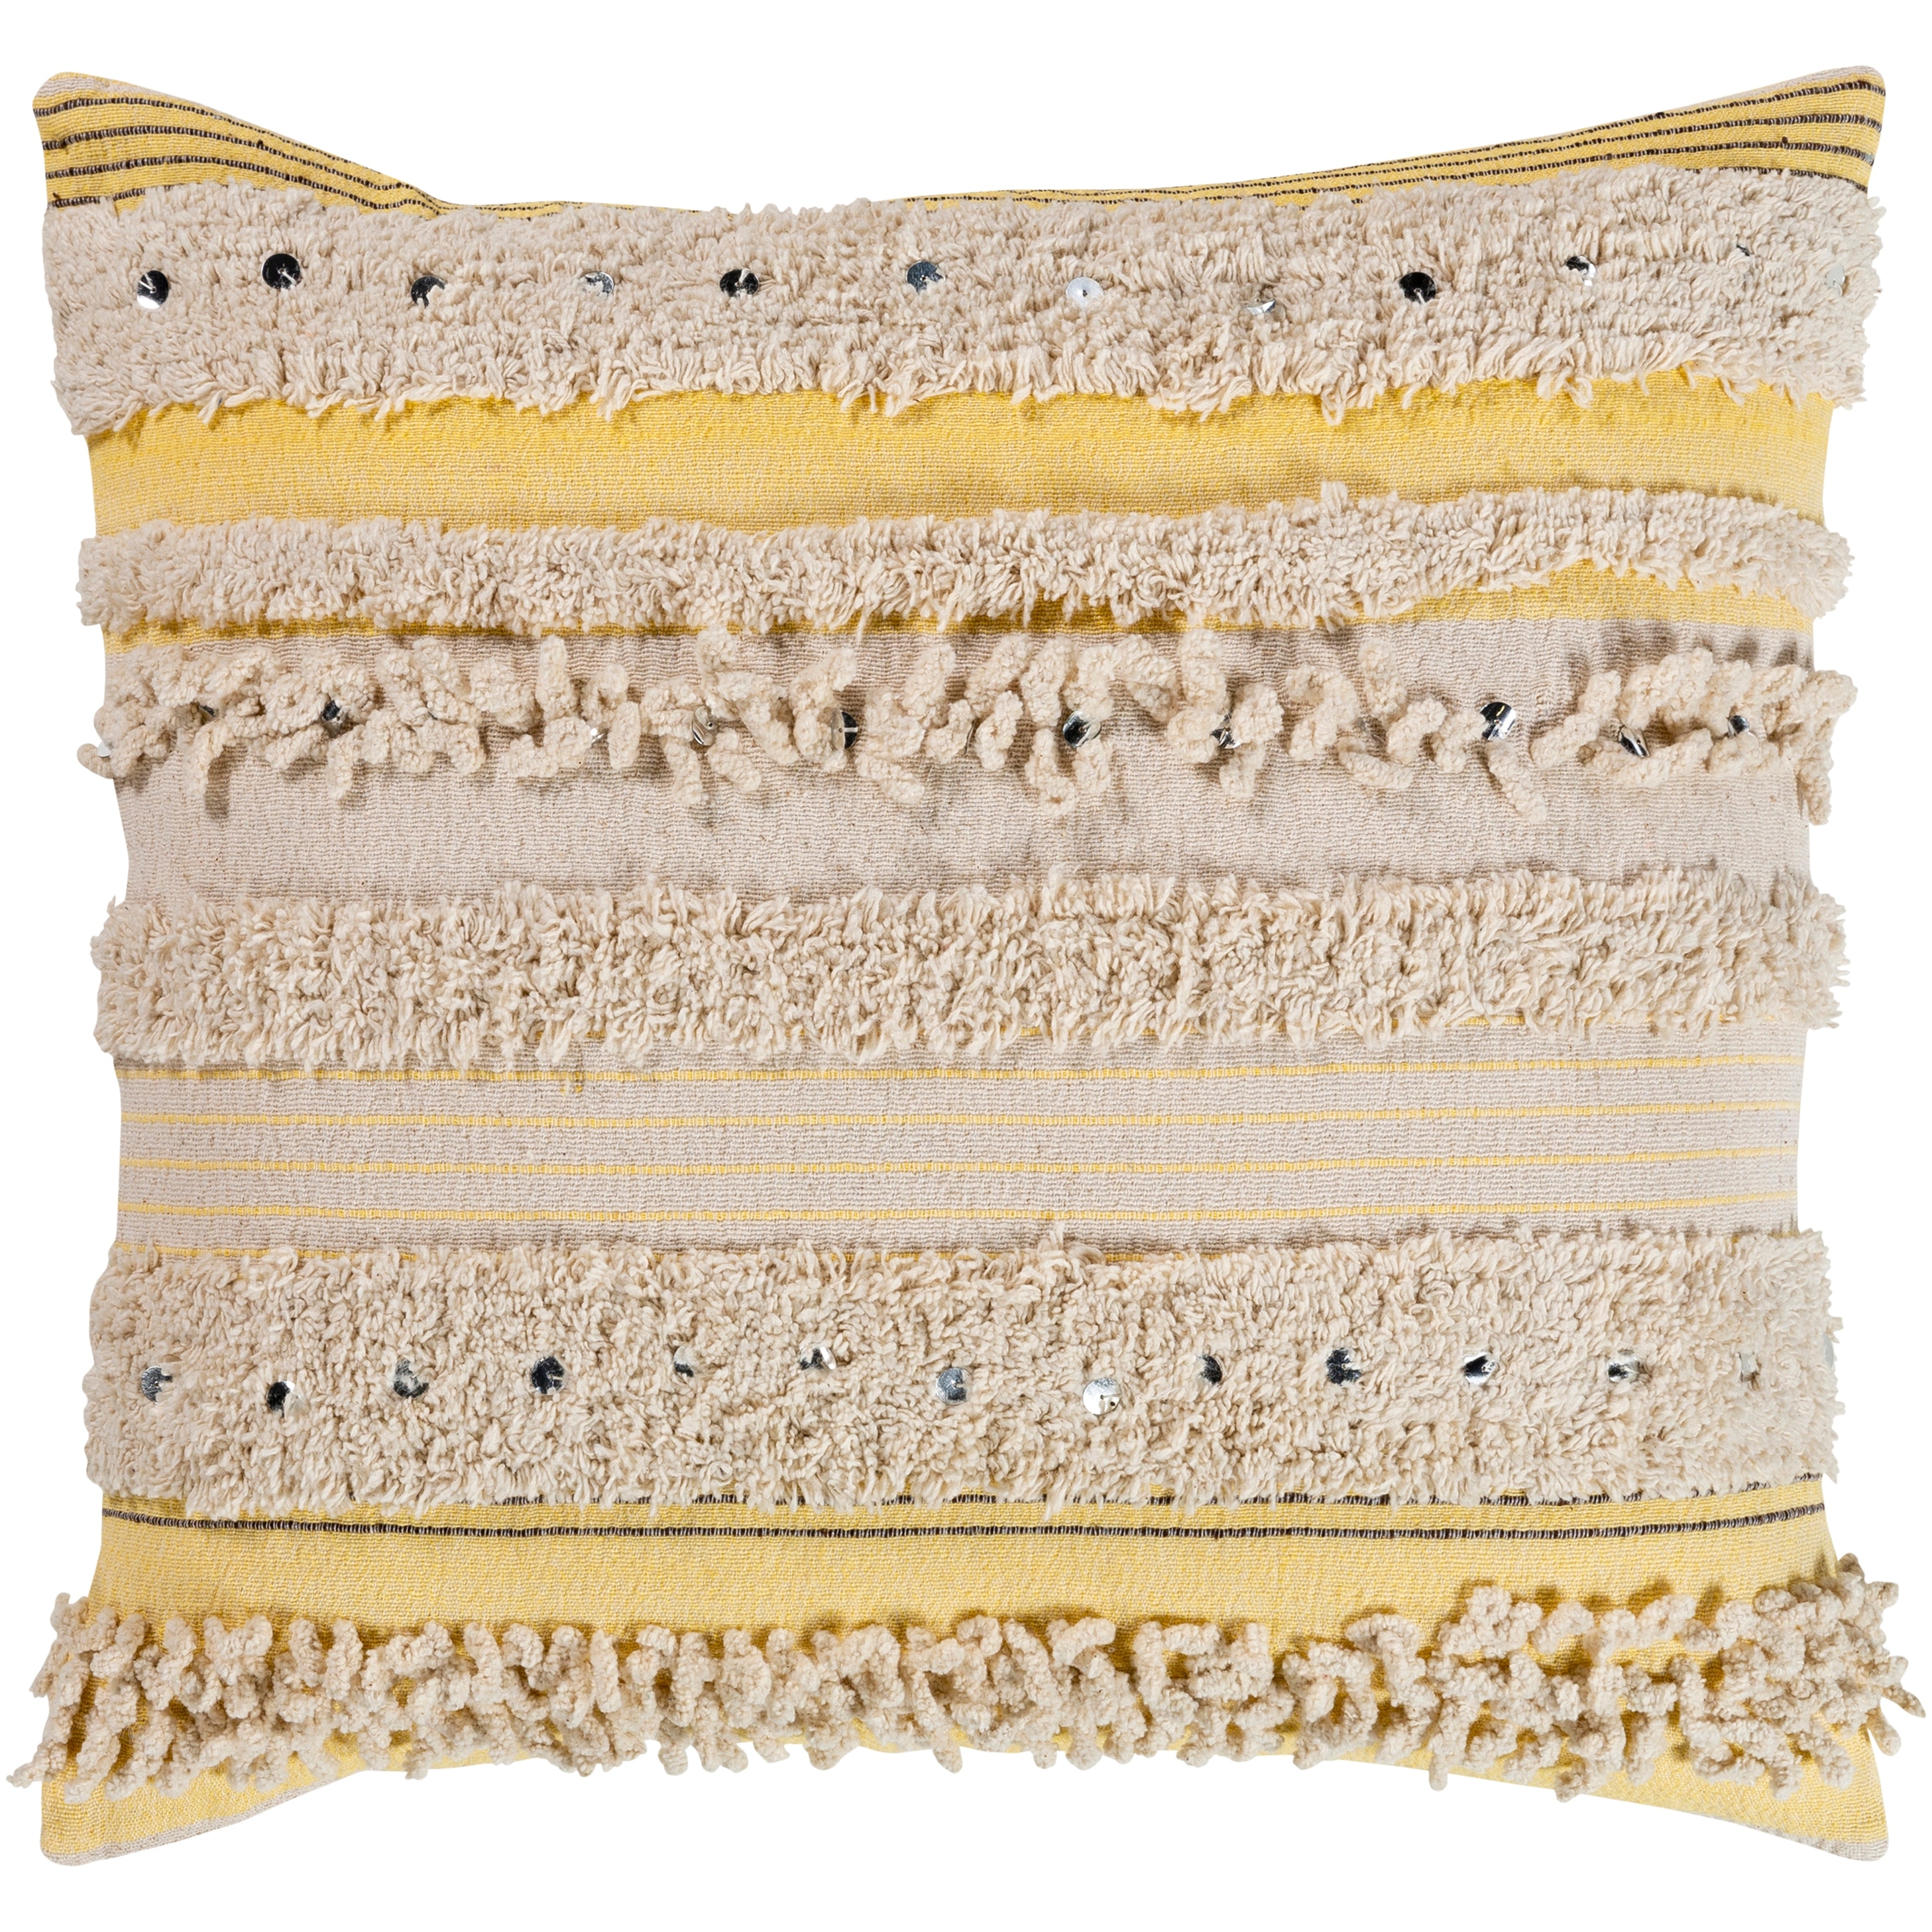 Talco Shaggy Boho Stripe 20-inch Throw Pillow - On Sale - Bed Bath